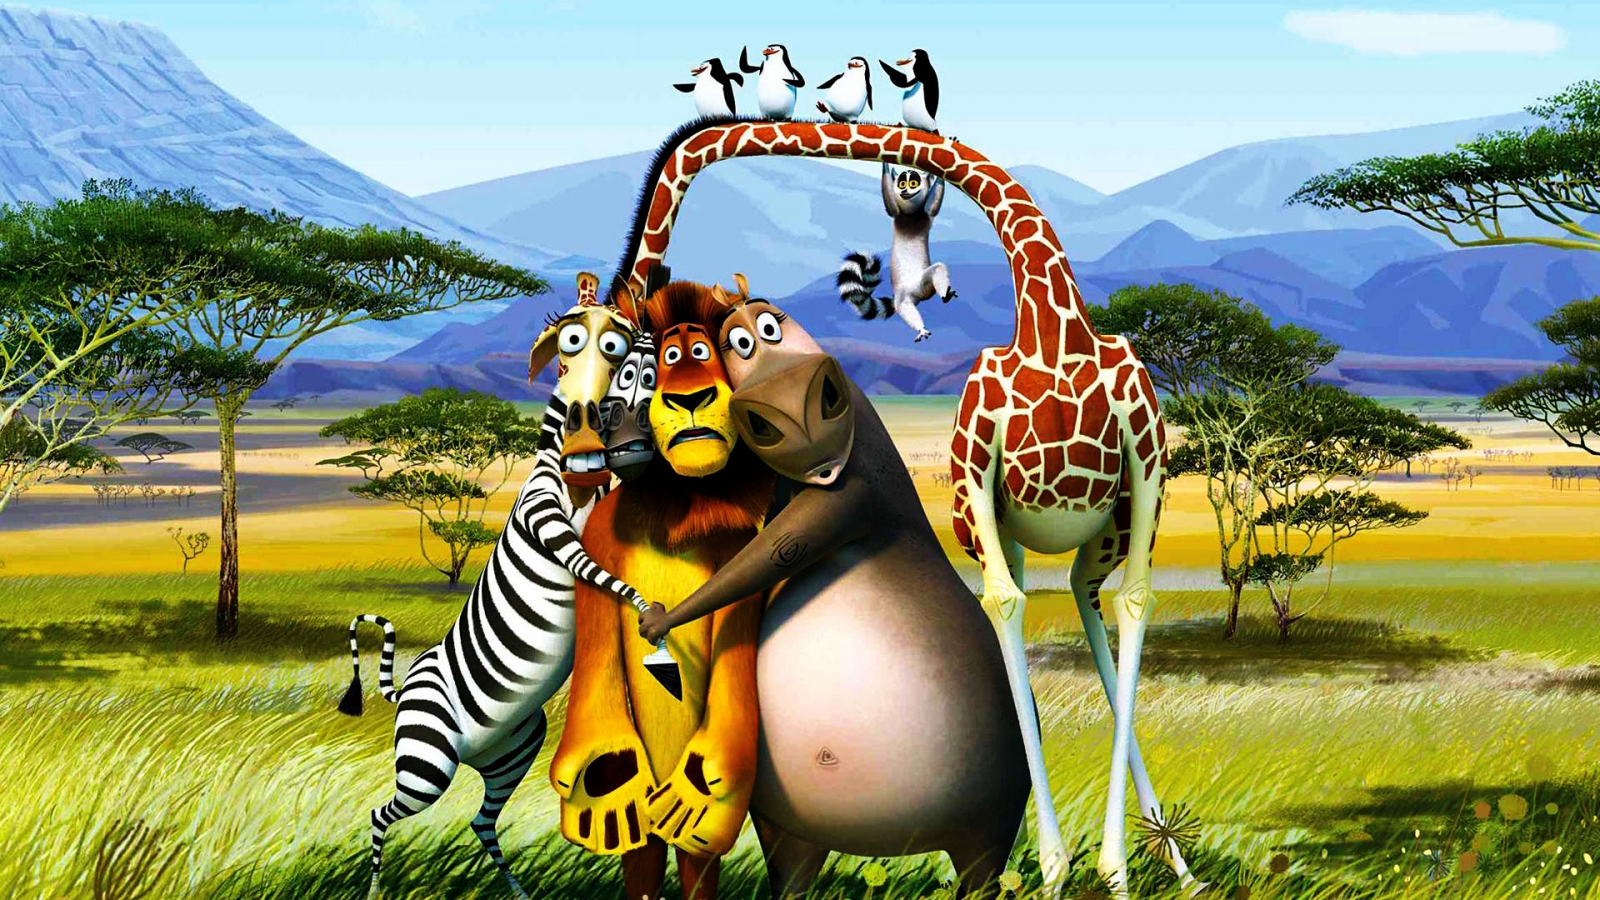 Madagascar 3 Poster for 1600 x 900 HDTV resolution